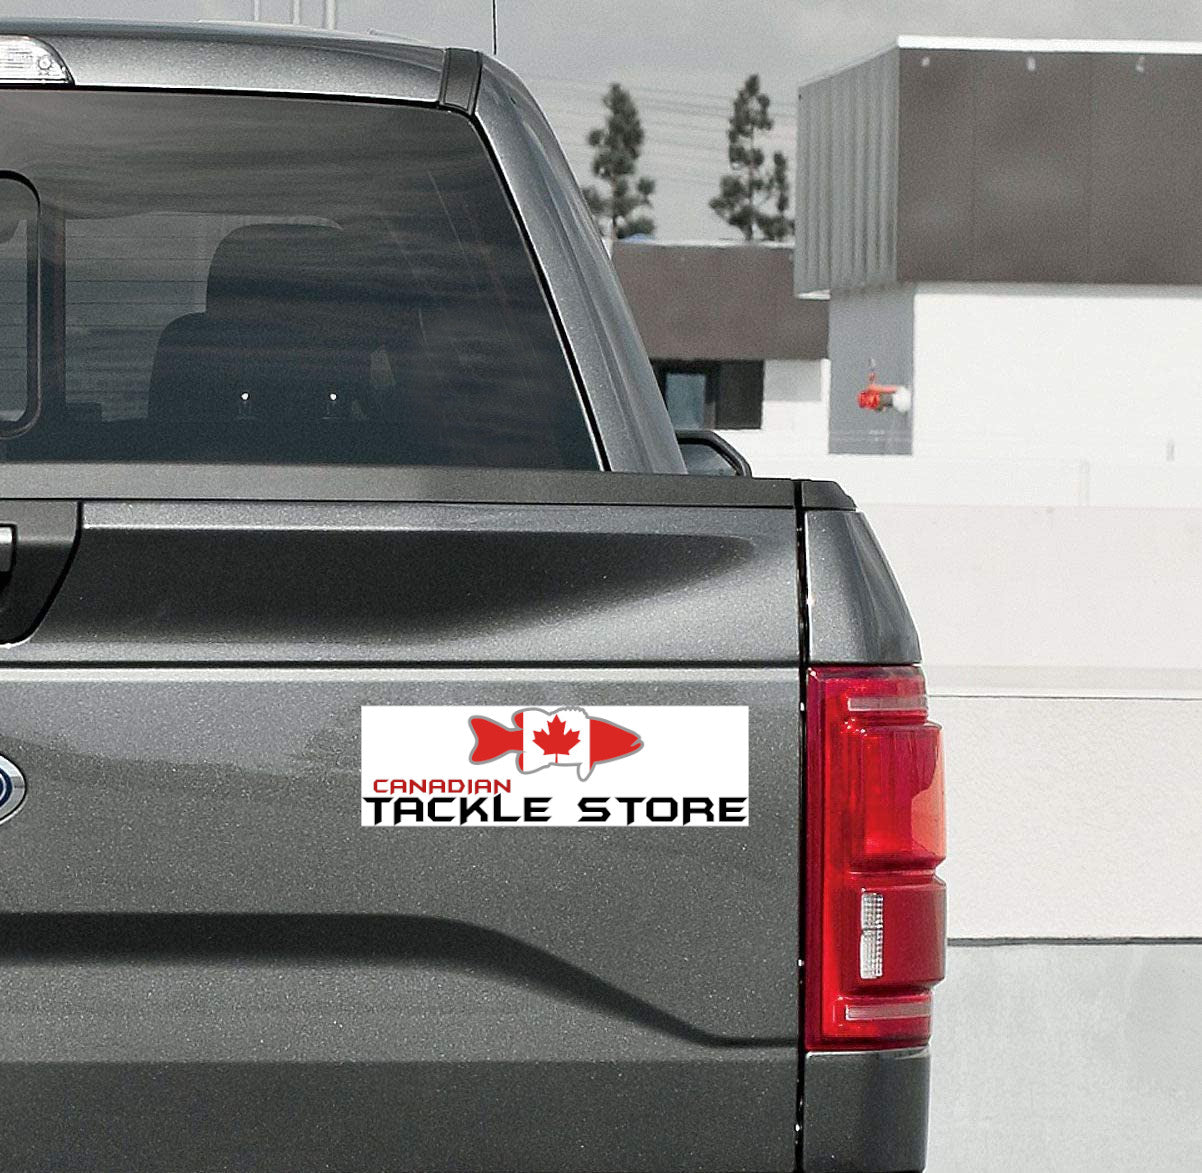 Canadian Tackle Store Bumper Sticker